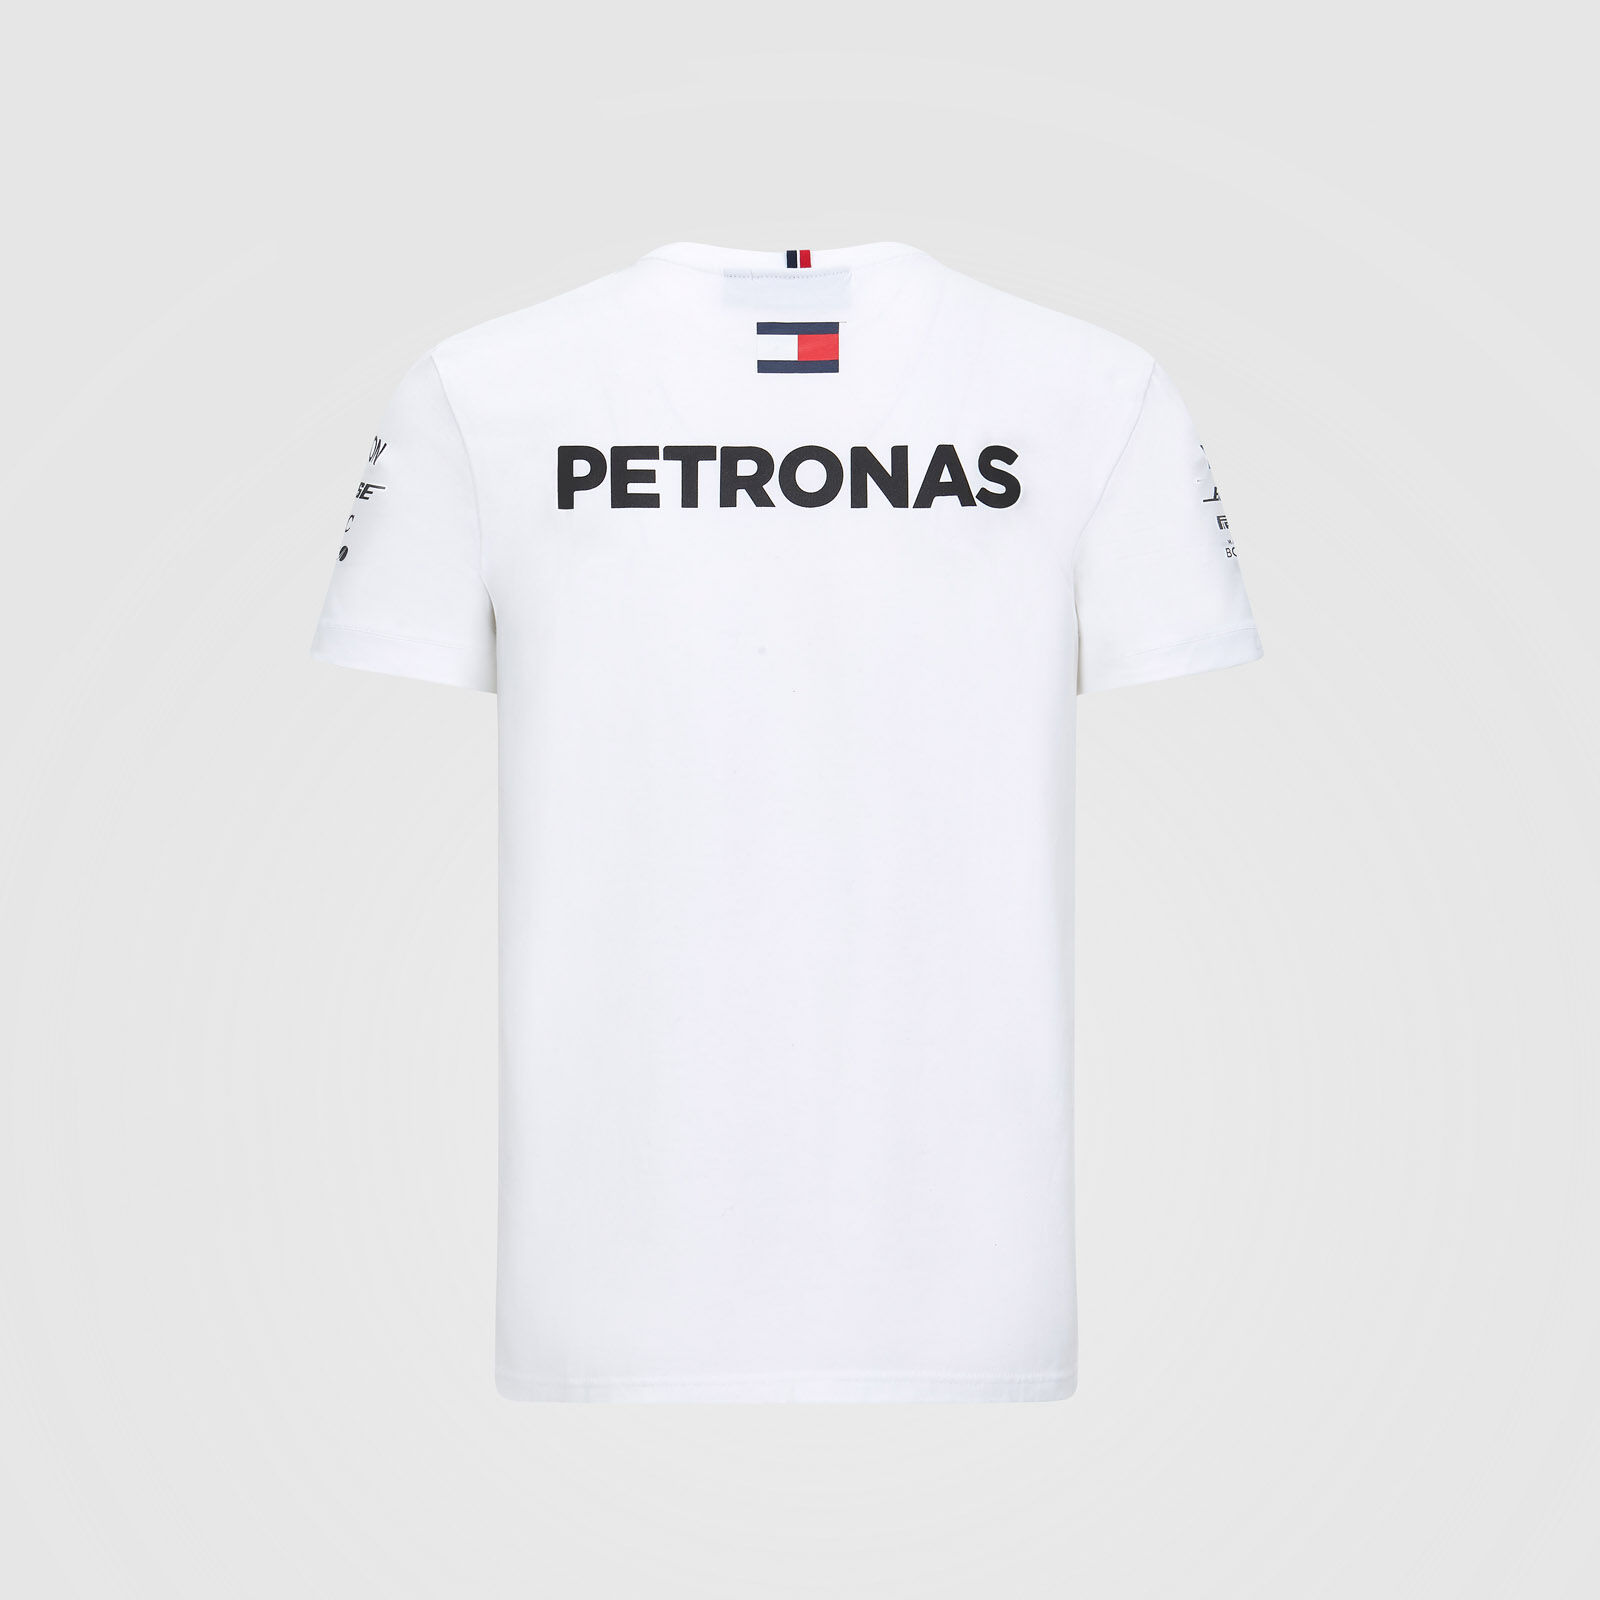 petronas cycling jersey